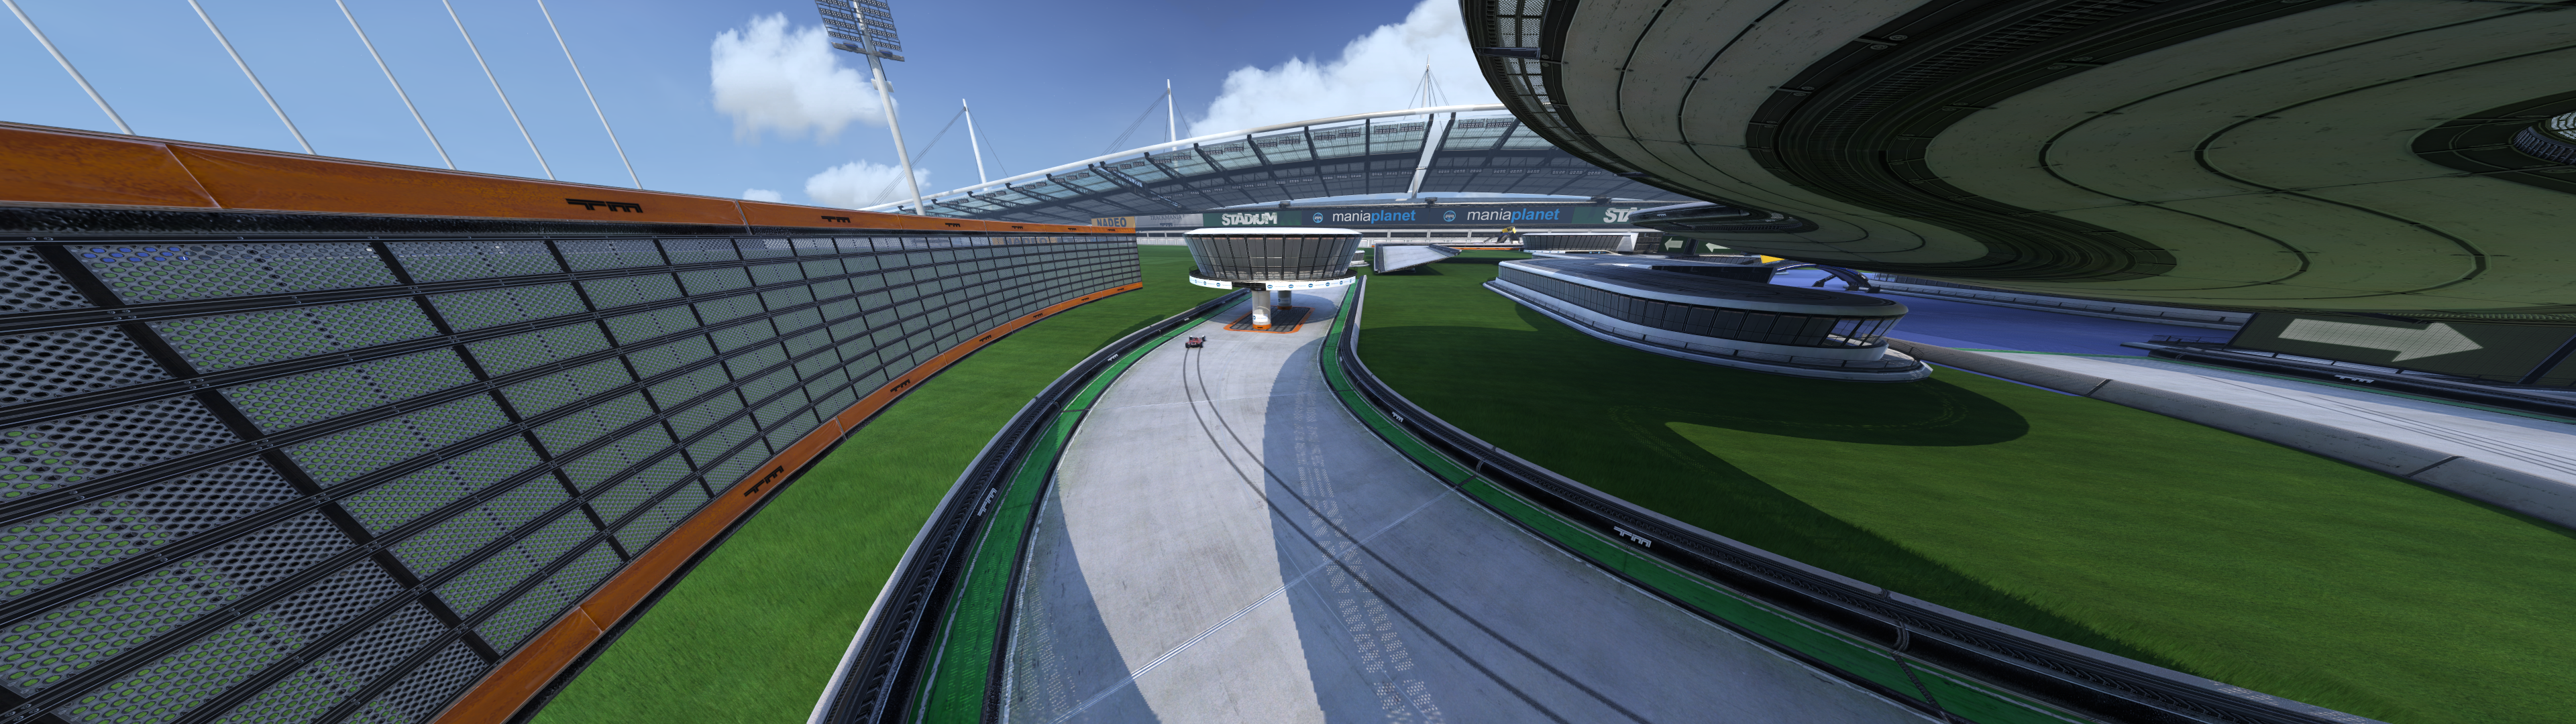 TrackMania Maniaplanet Stadium Nadeo Ubisoft 3840x1080